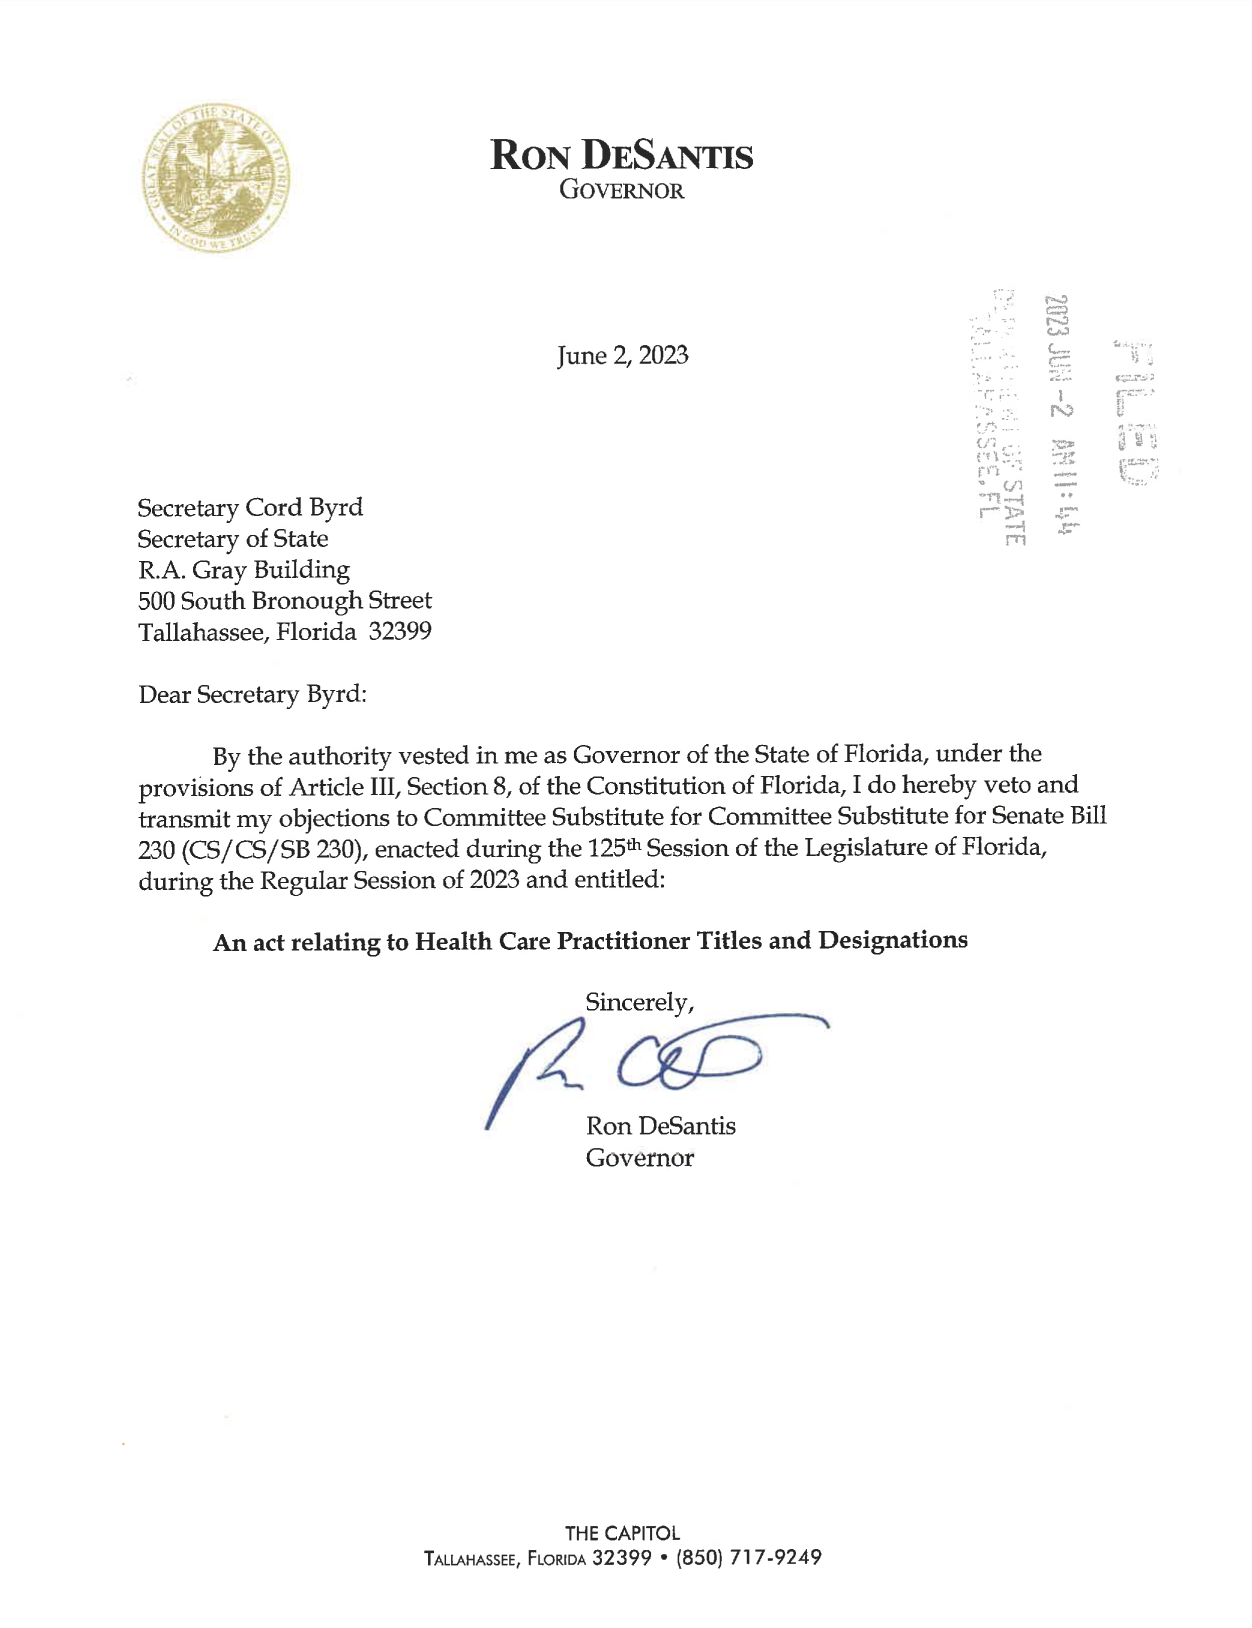 Earlier today, Governor Ron DeSantis vetoed Florida's anti-optometry bill SB-230. 